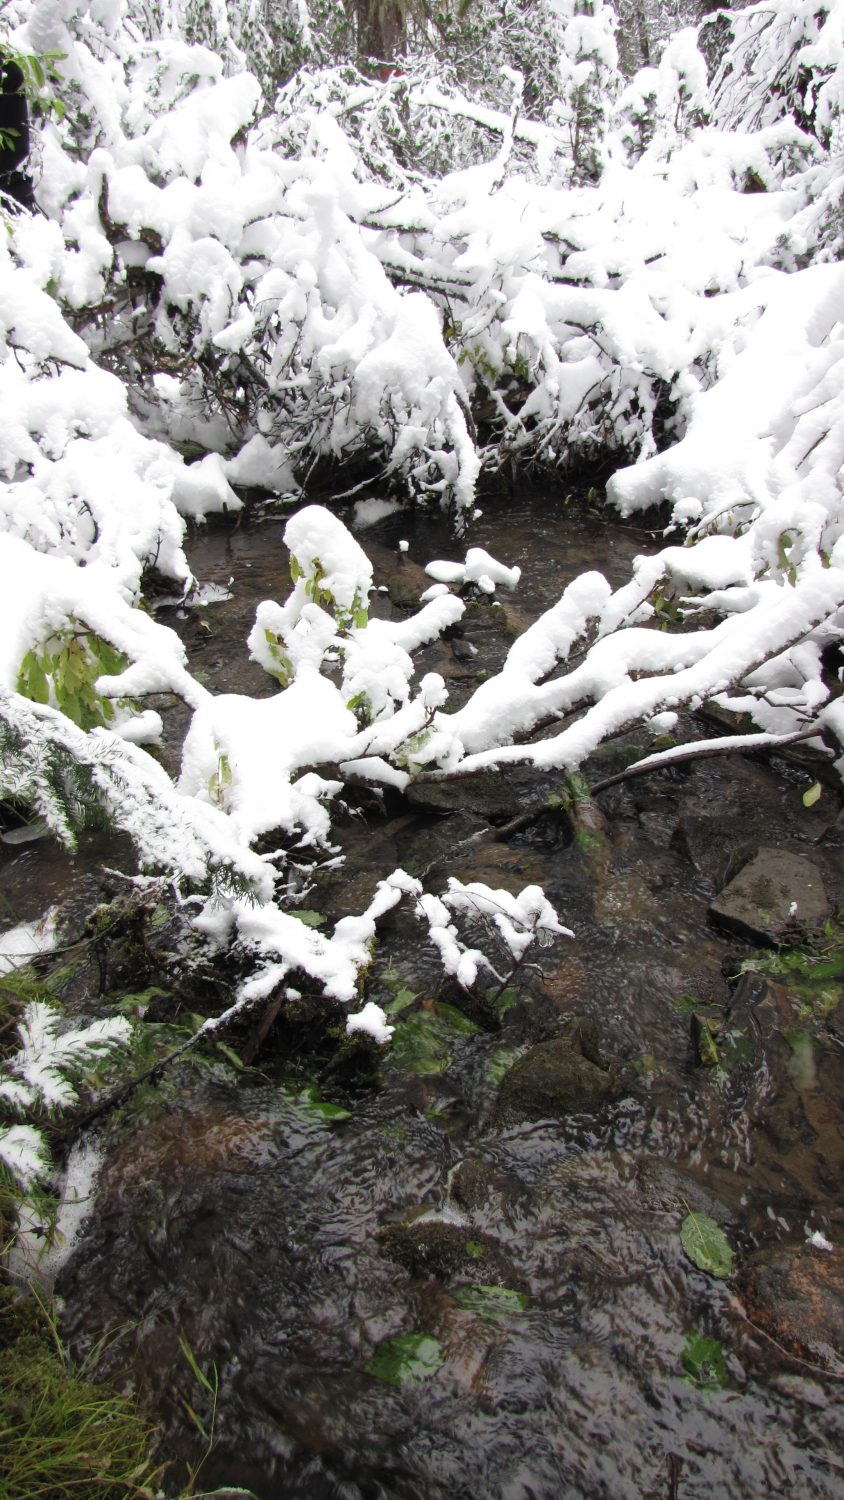 Snowy branch over a stream